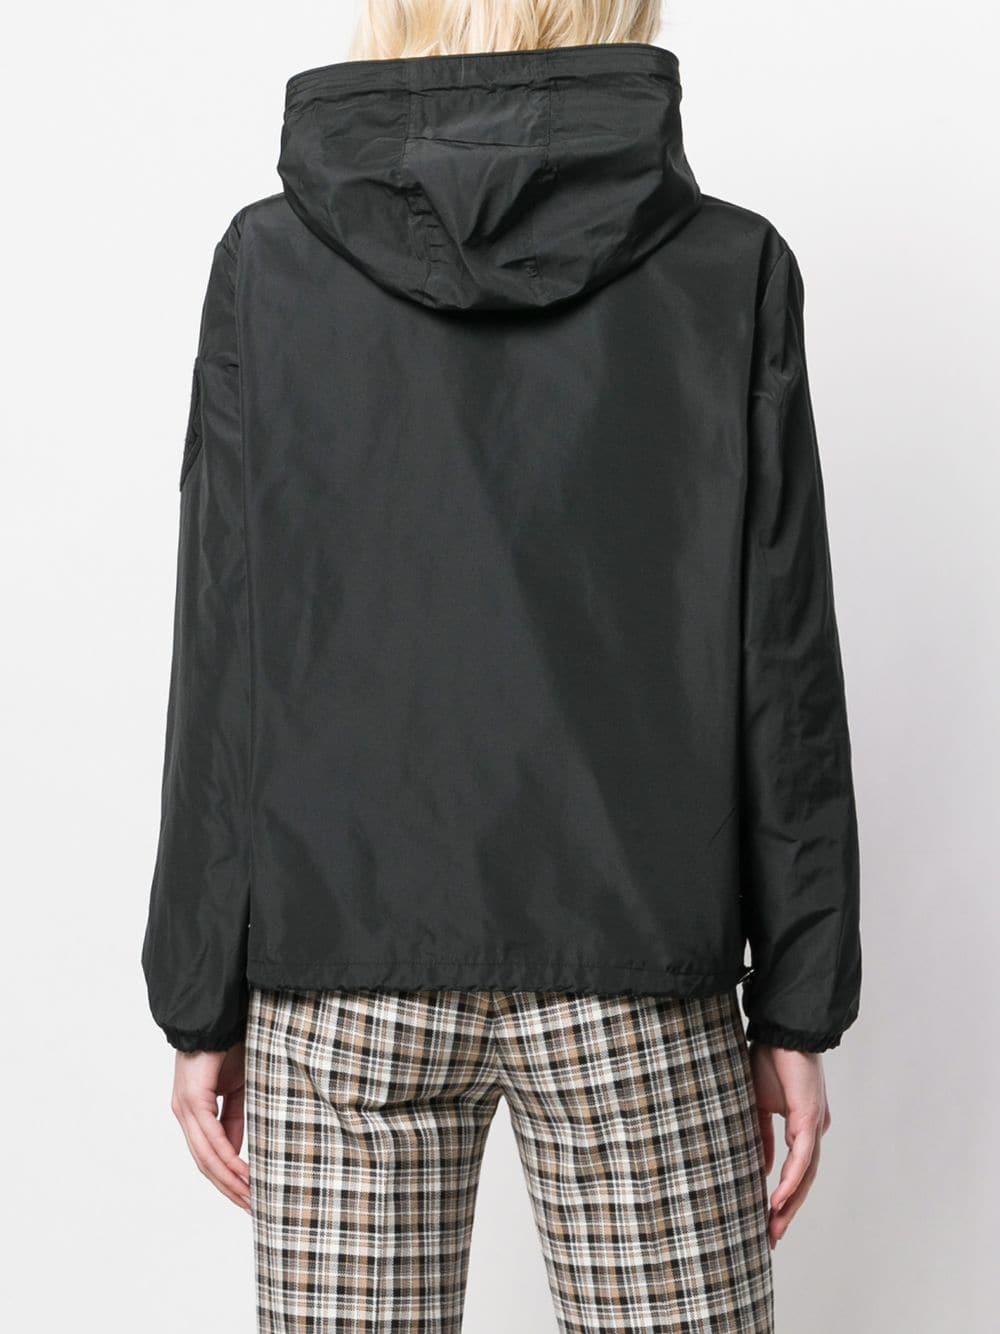 Moncler Hooded Alexandrite Jacket in Black - Lyst